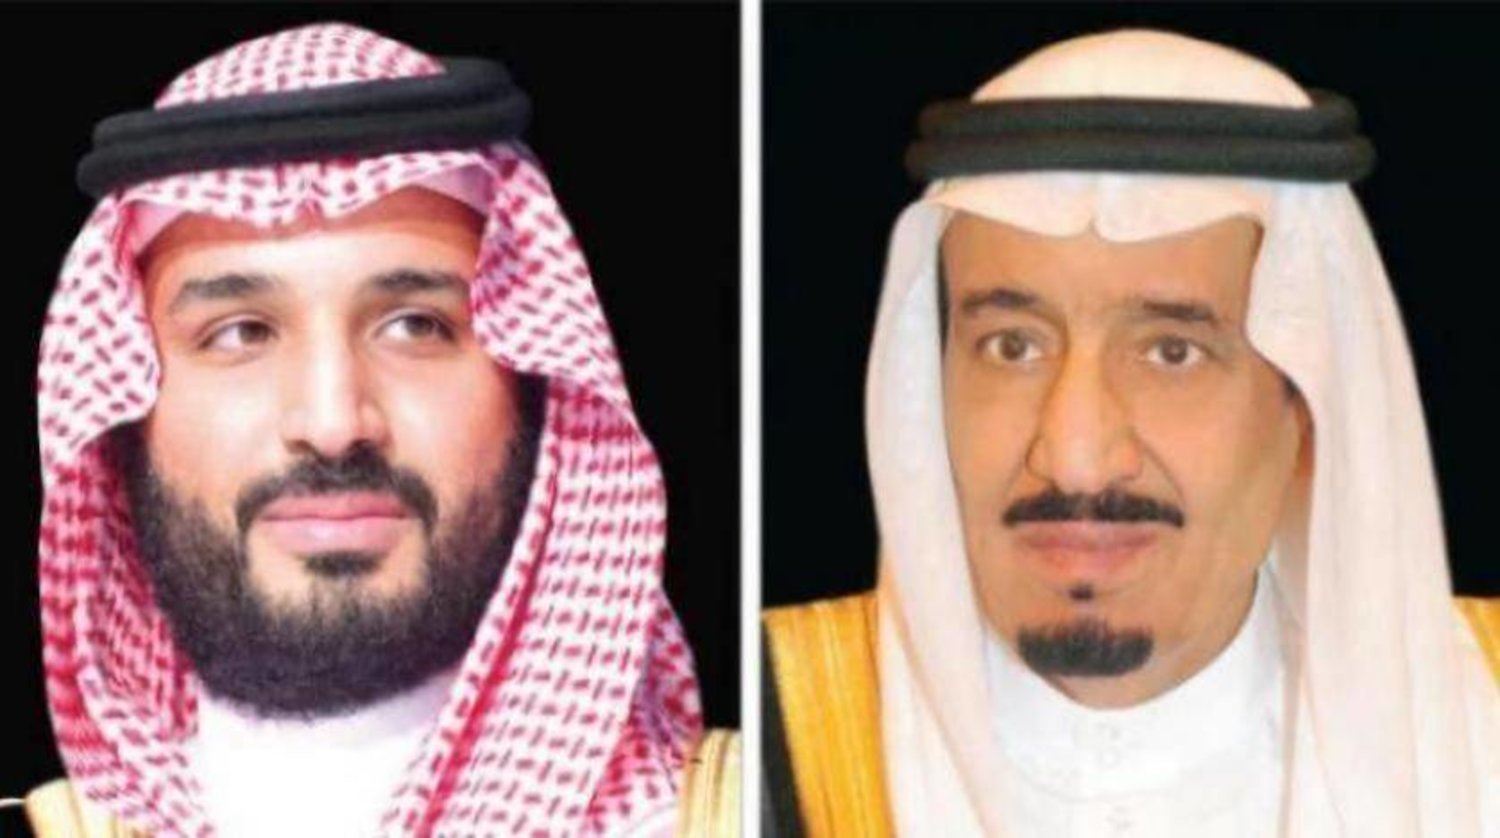 Custodian of the Two Holy Mosques King Salman bin Abdulaziz Al Saud and Crown Prince Mohammed bin Salman bin Abdulaziz